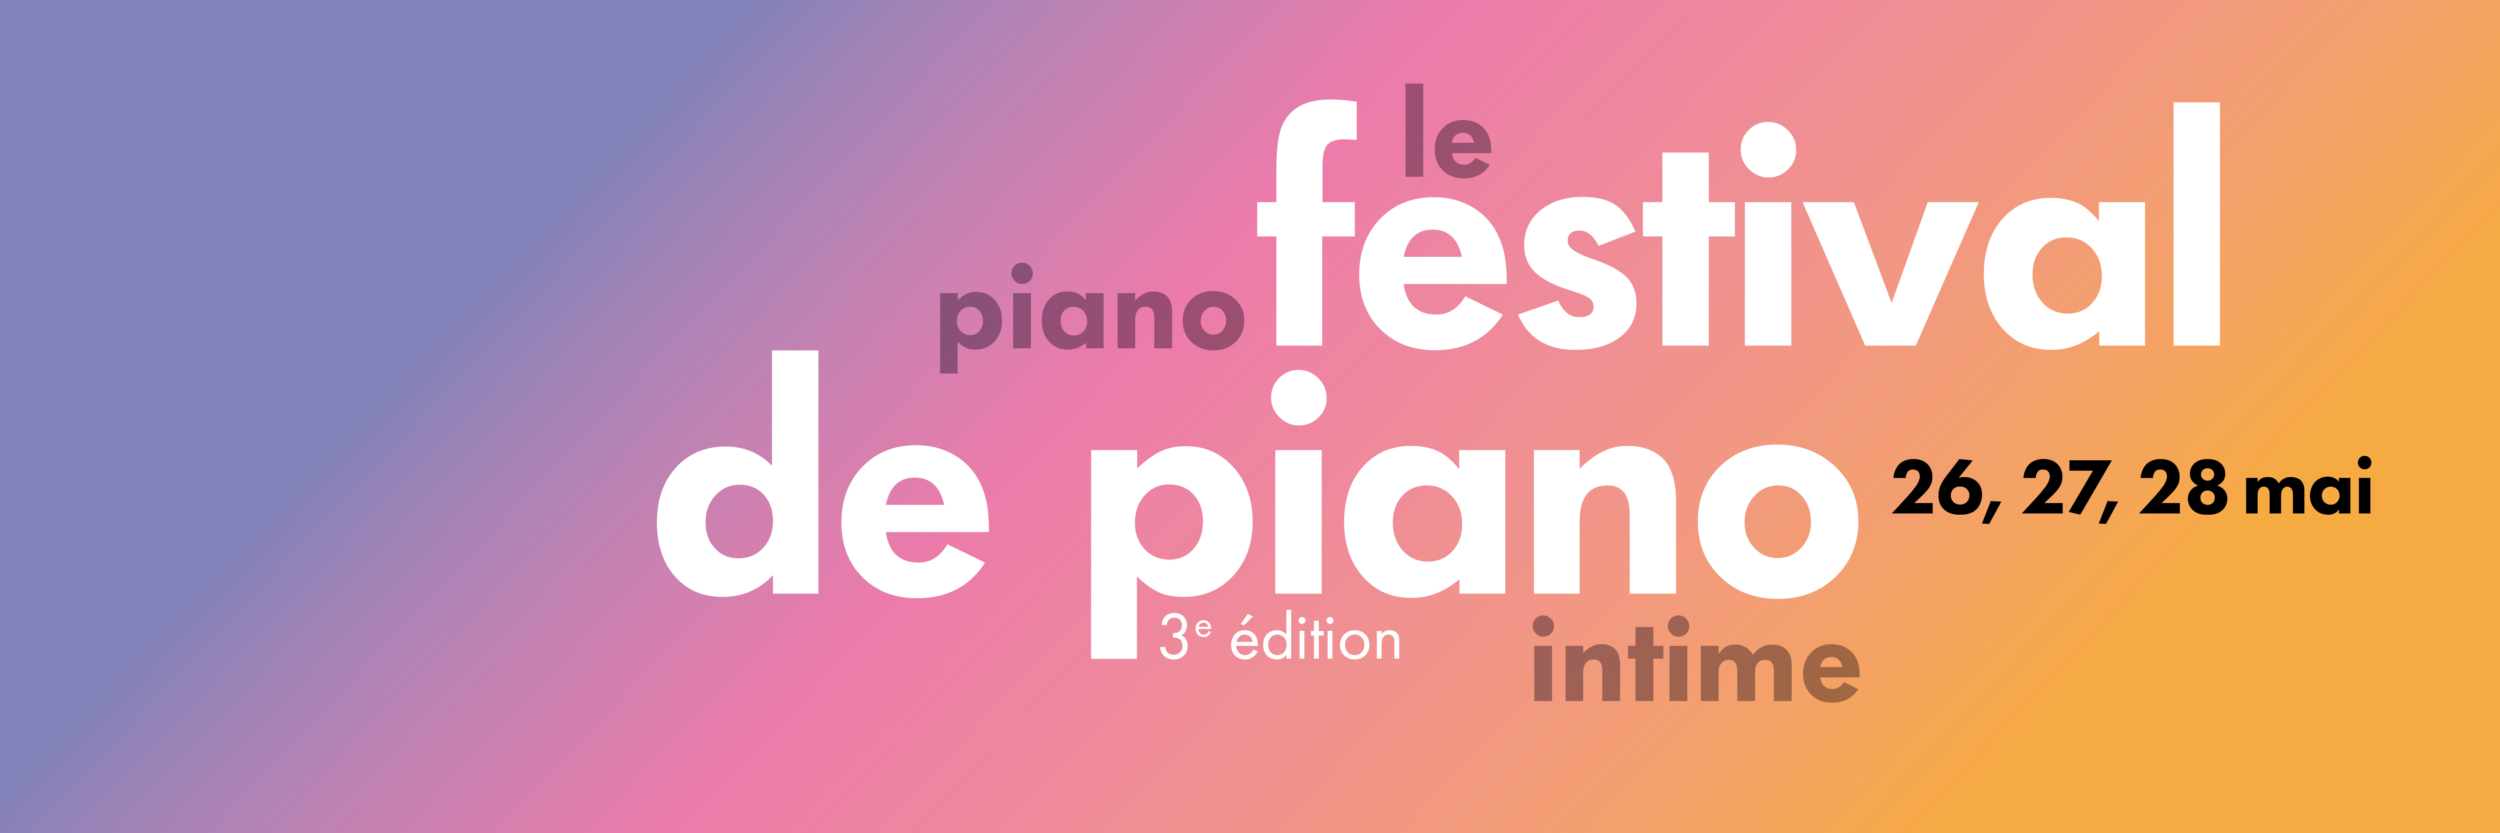 Festival de piano - piano intime musée des impressionnismes giverny